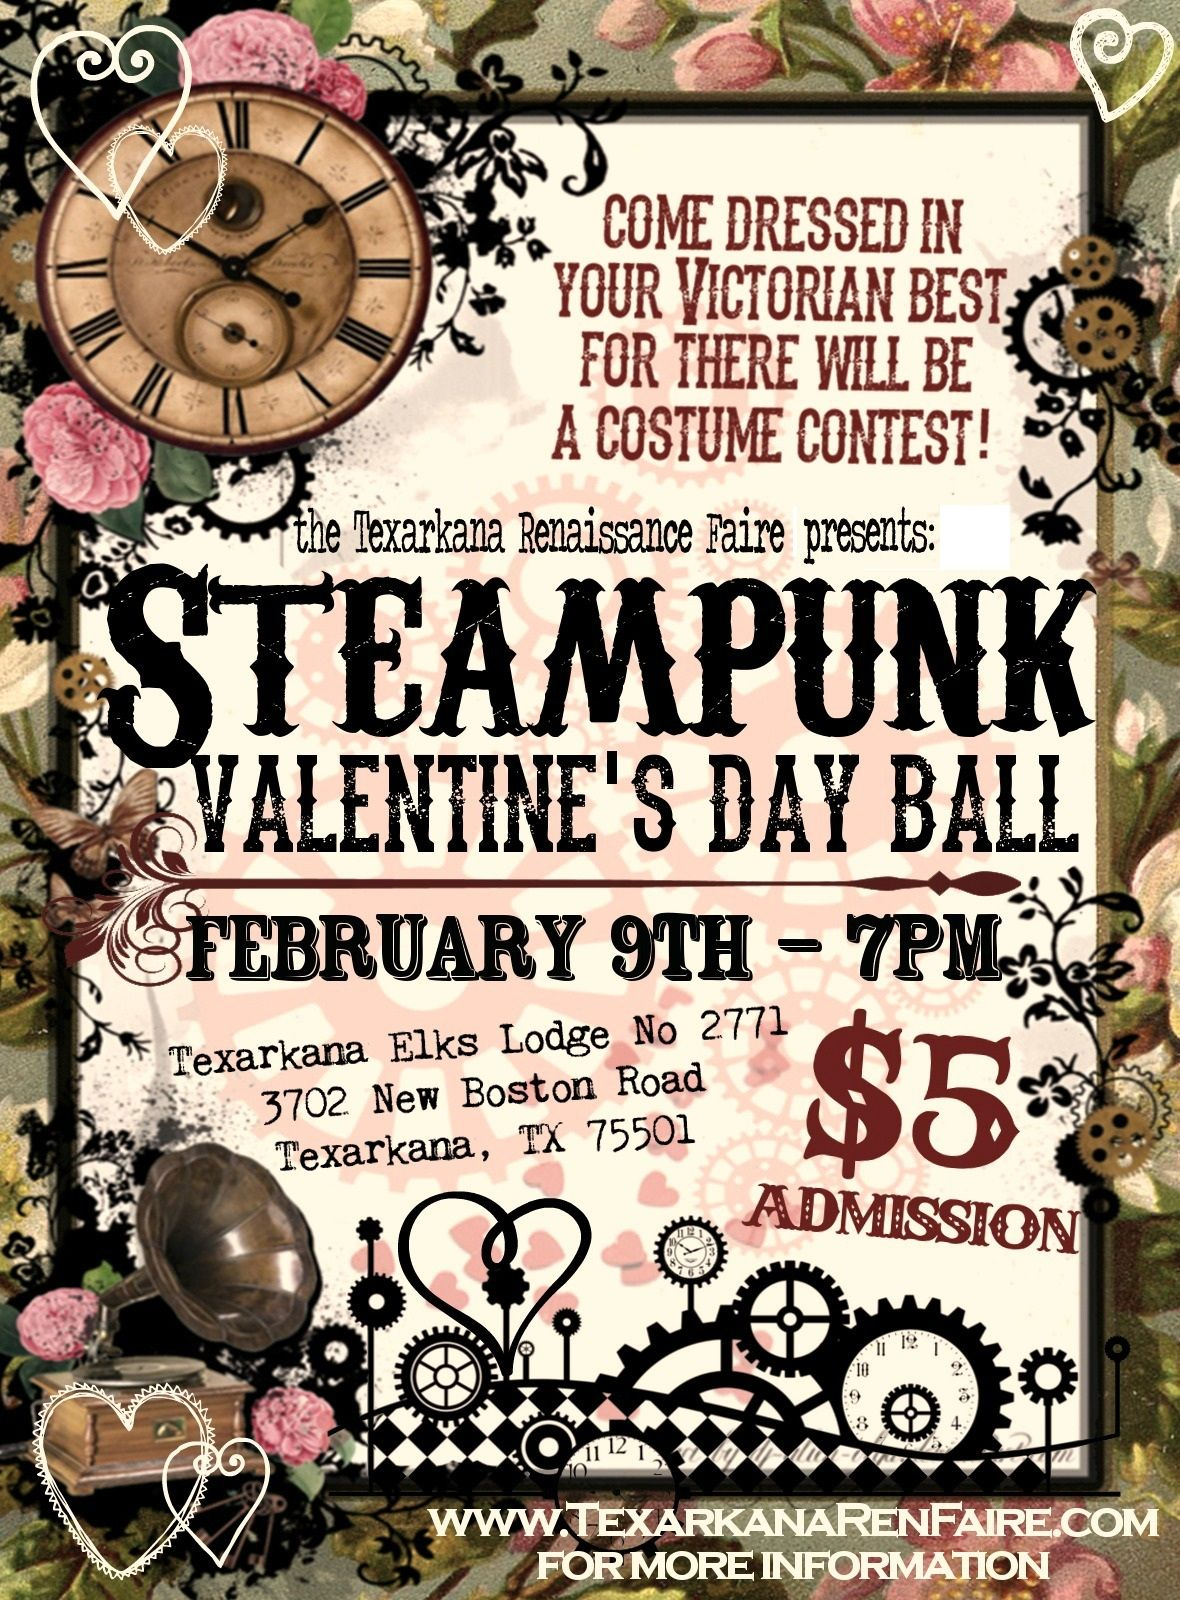 Texarkana Renaissance Faire: Steampunk Valentines Day Ball